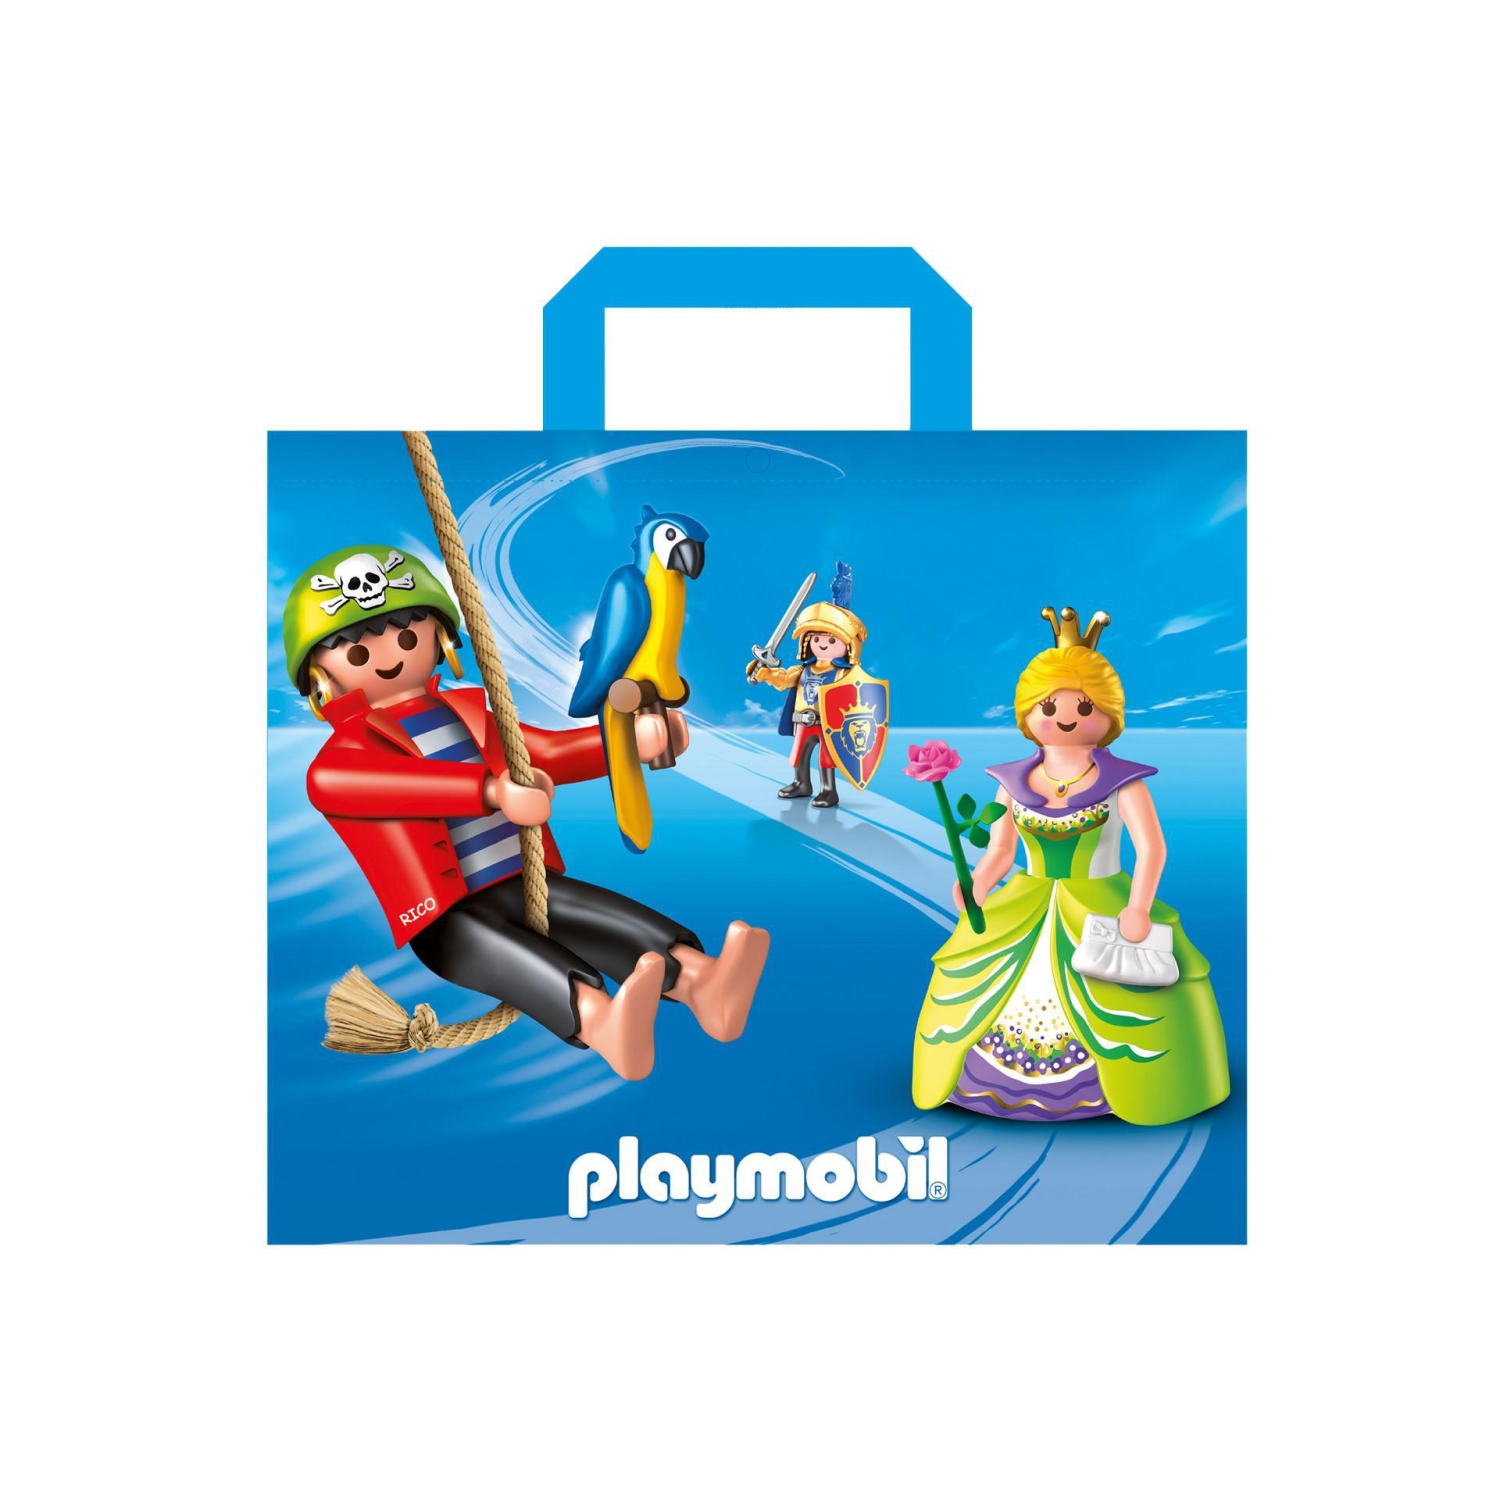 Playmobil: Reusable Shopping / Bag -65 X 53 cm - Polypropylen 86483